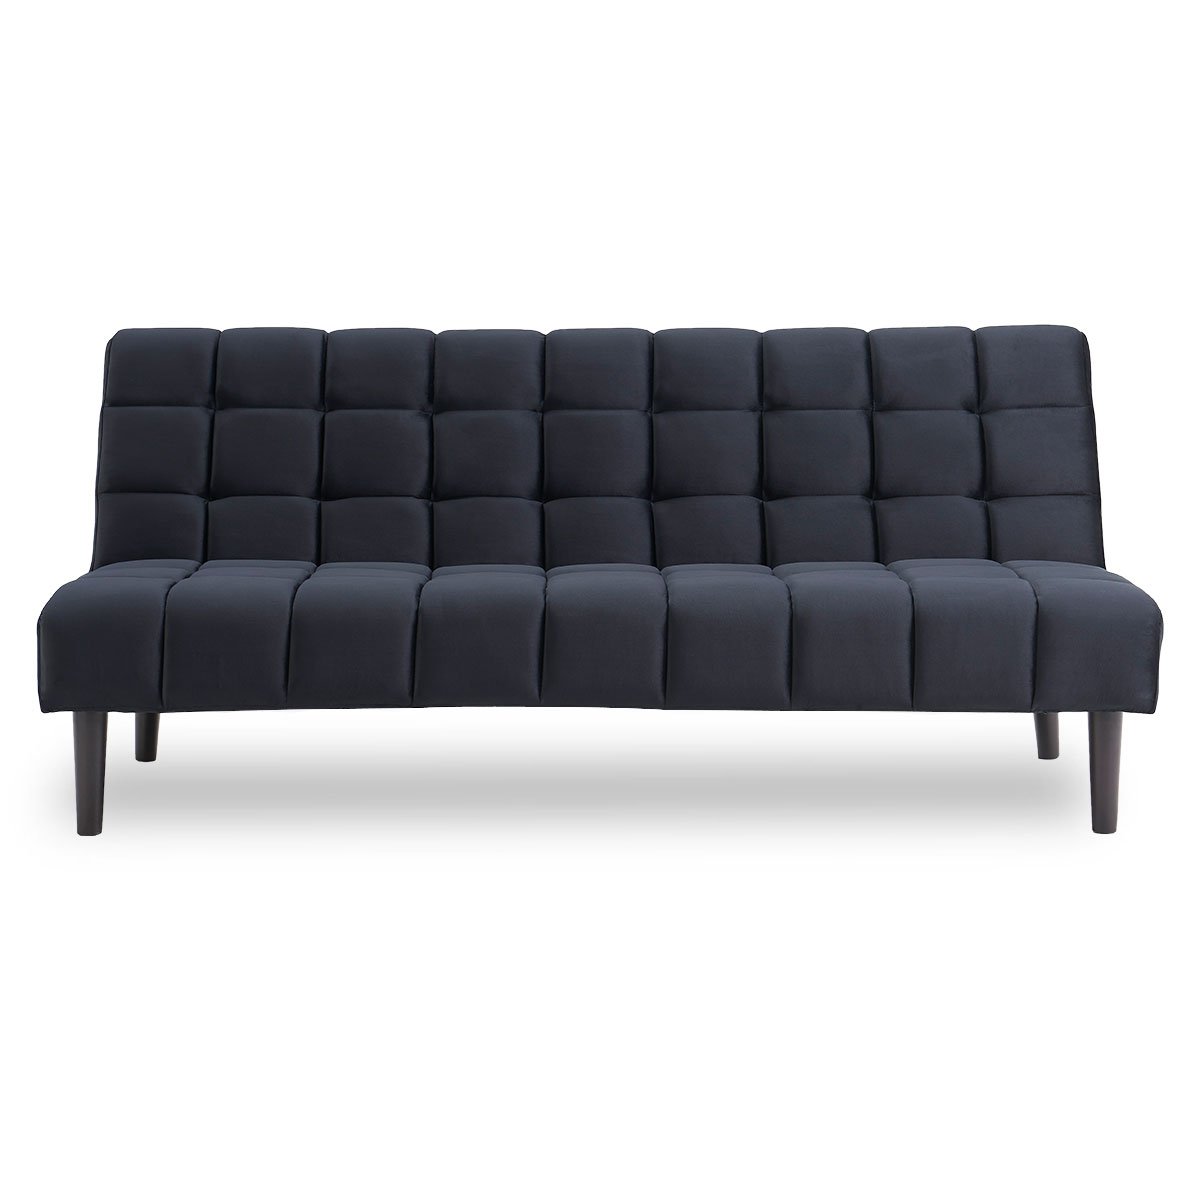 Sarantino Faux Suede Fabric Sofa Bed - Black | Stylish Lounge